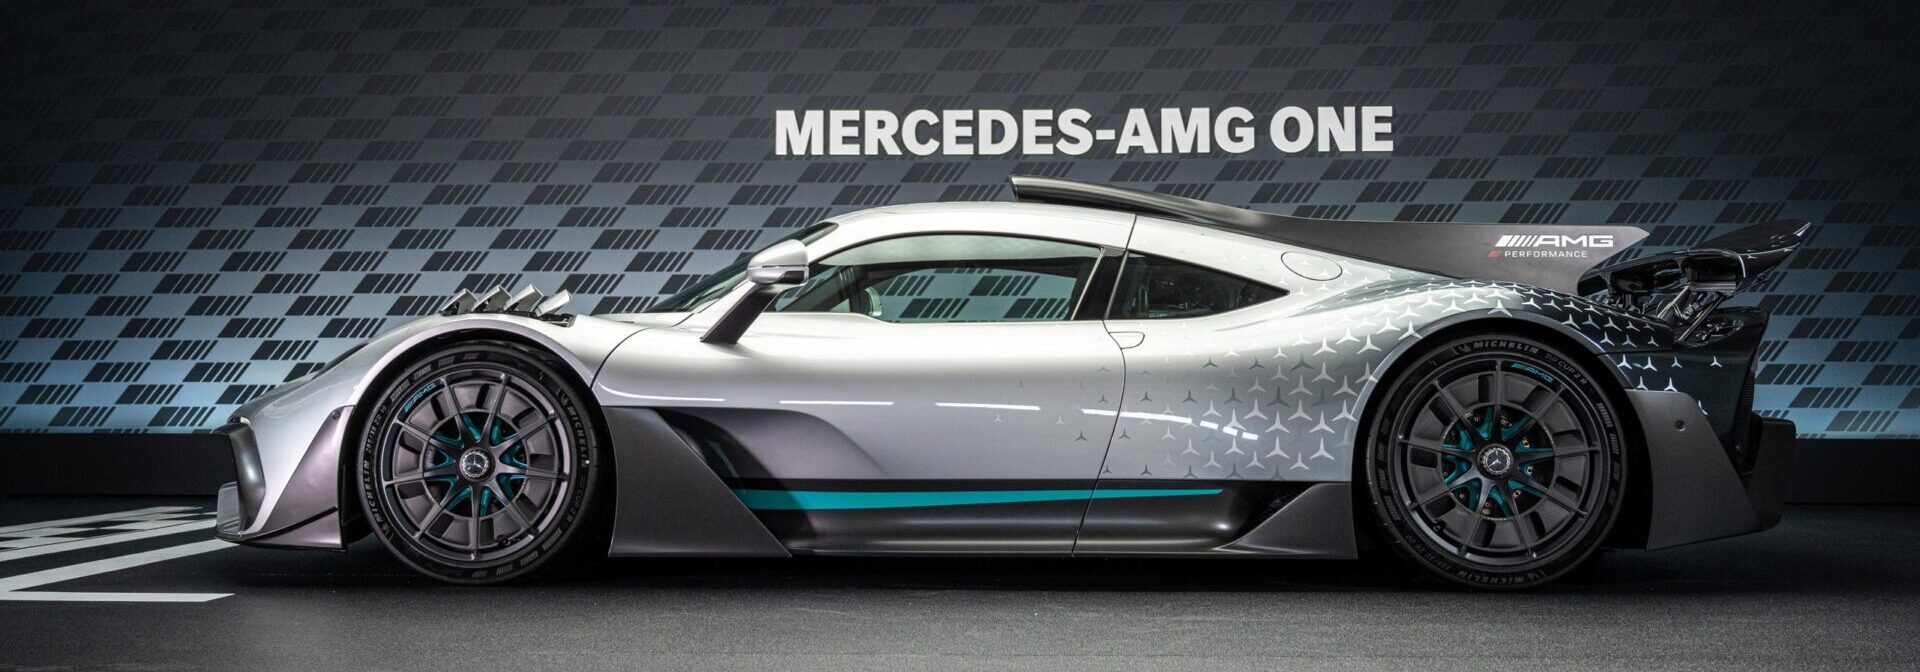 Редкий гиперкар Mercedes-AMG One выставлен на продажу и дороже Bugatti Chiron